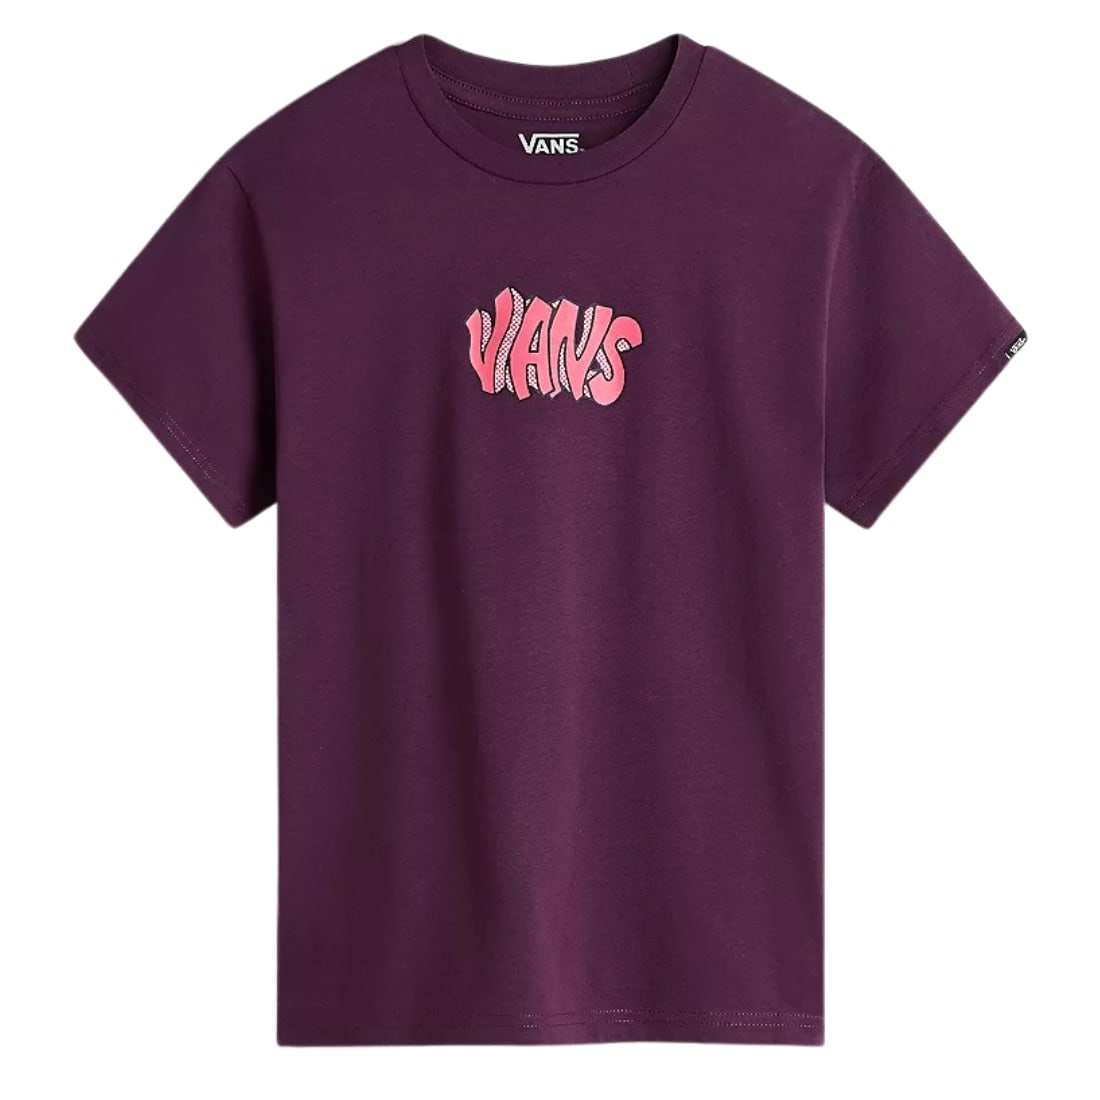 Vans Kids Tag T-Shirt - Blackberry Wine - Boys Skate Brand T-Shirt by Vans